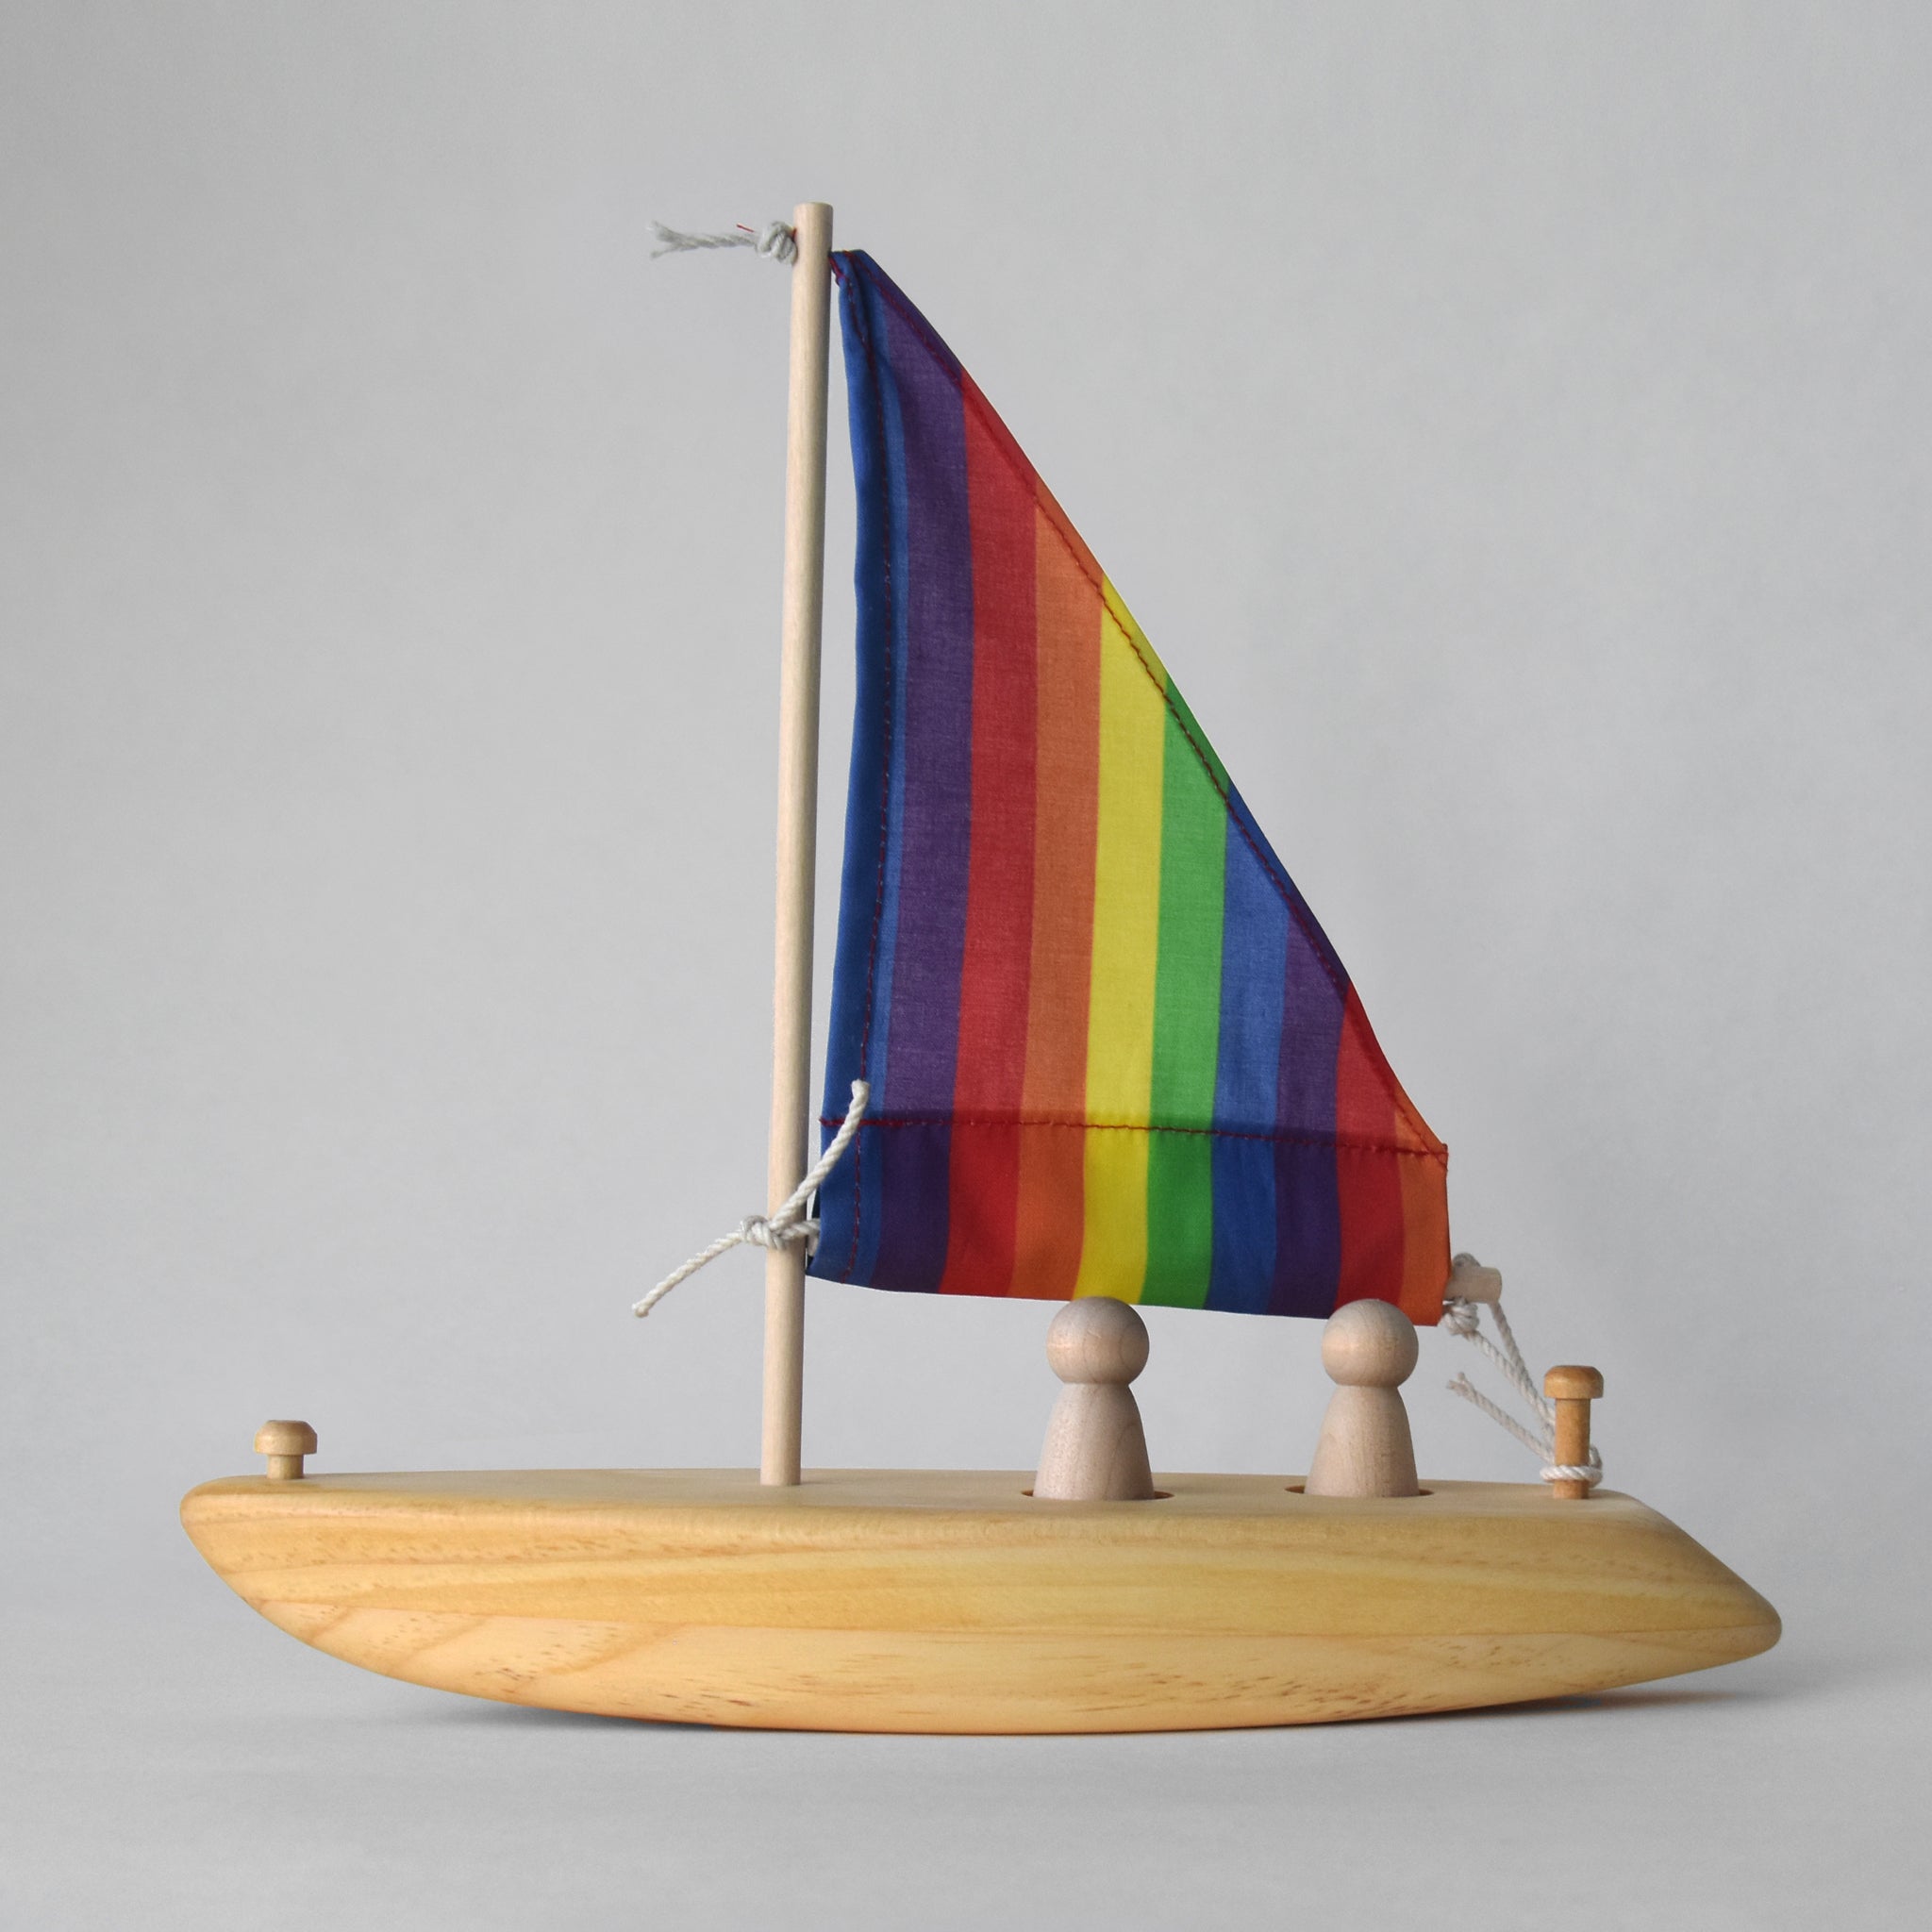 Handmade wooden toy sailboat with rainbow fabric sail | Salt Air Supply